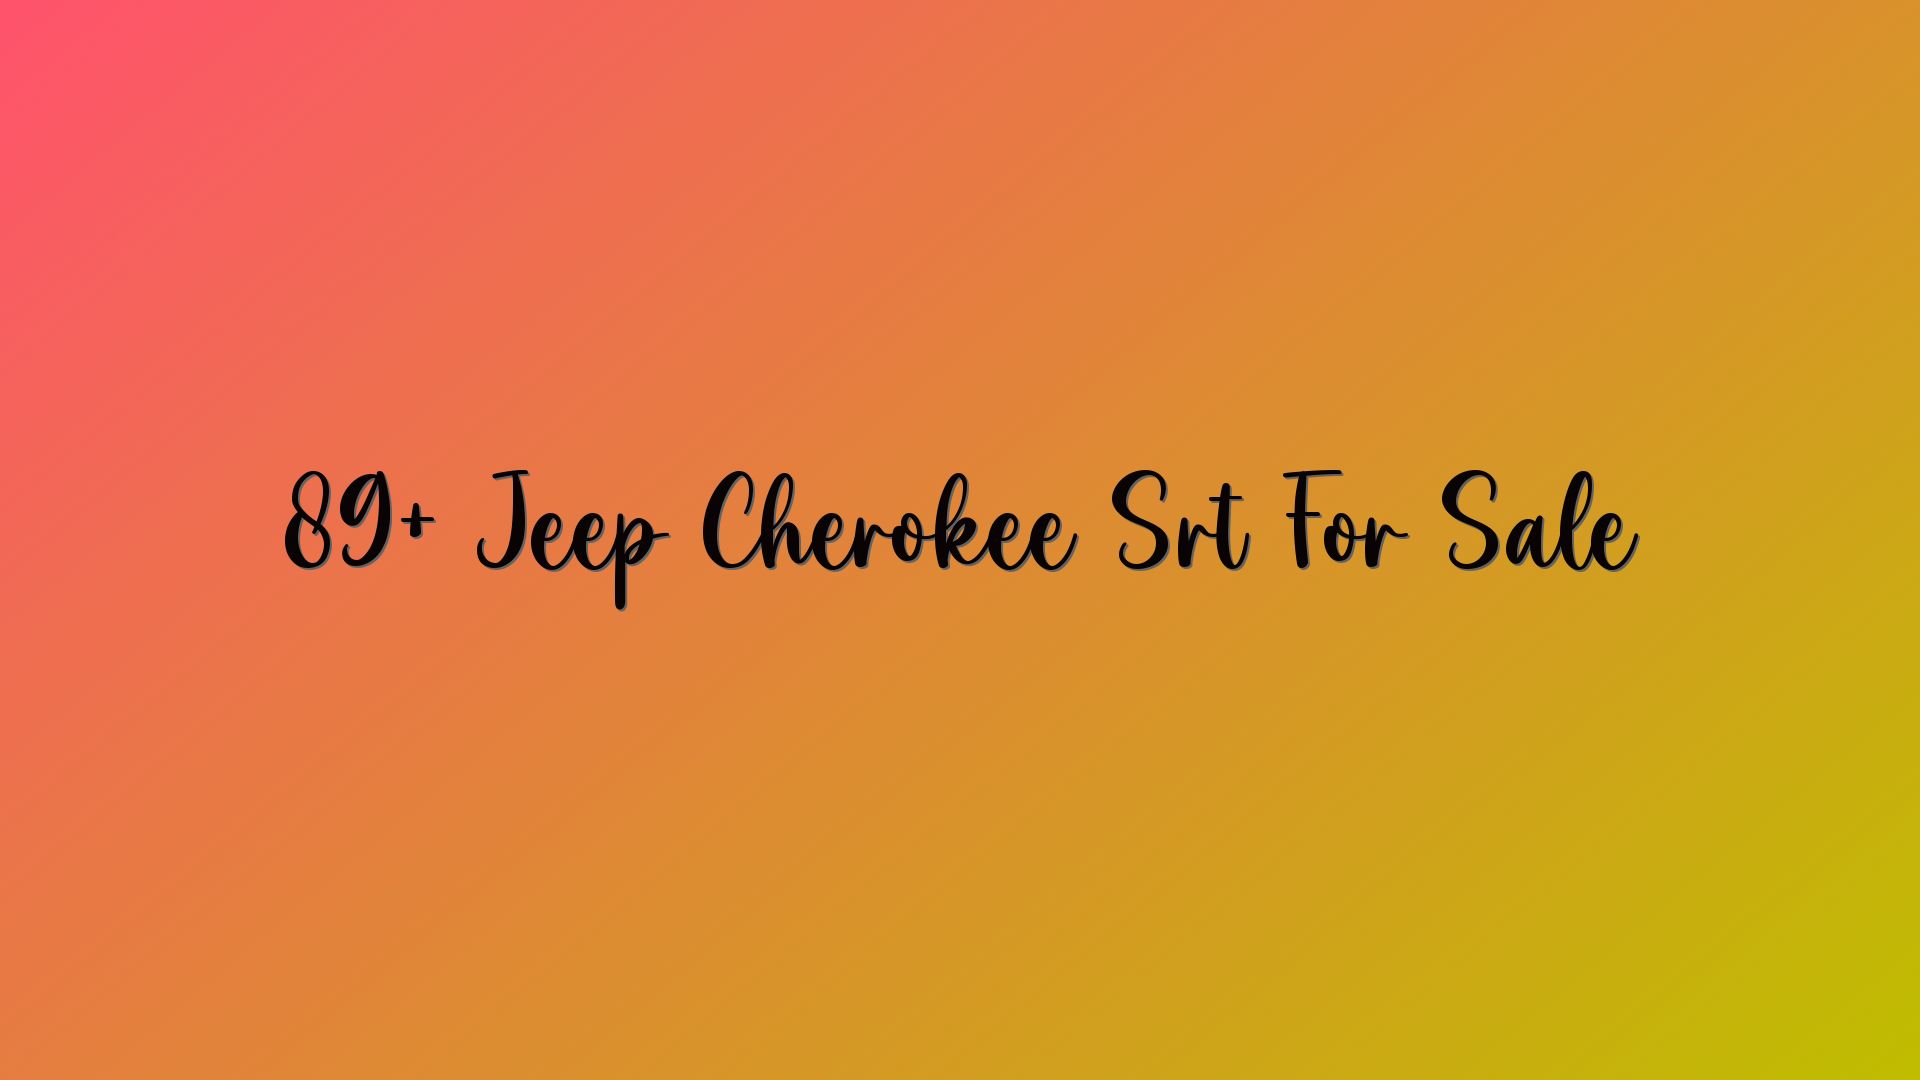 89+ Jeep Cherokee Srt For Sale